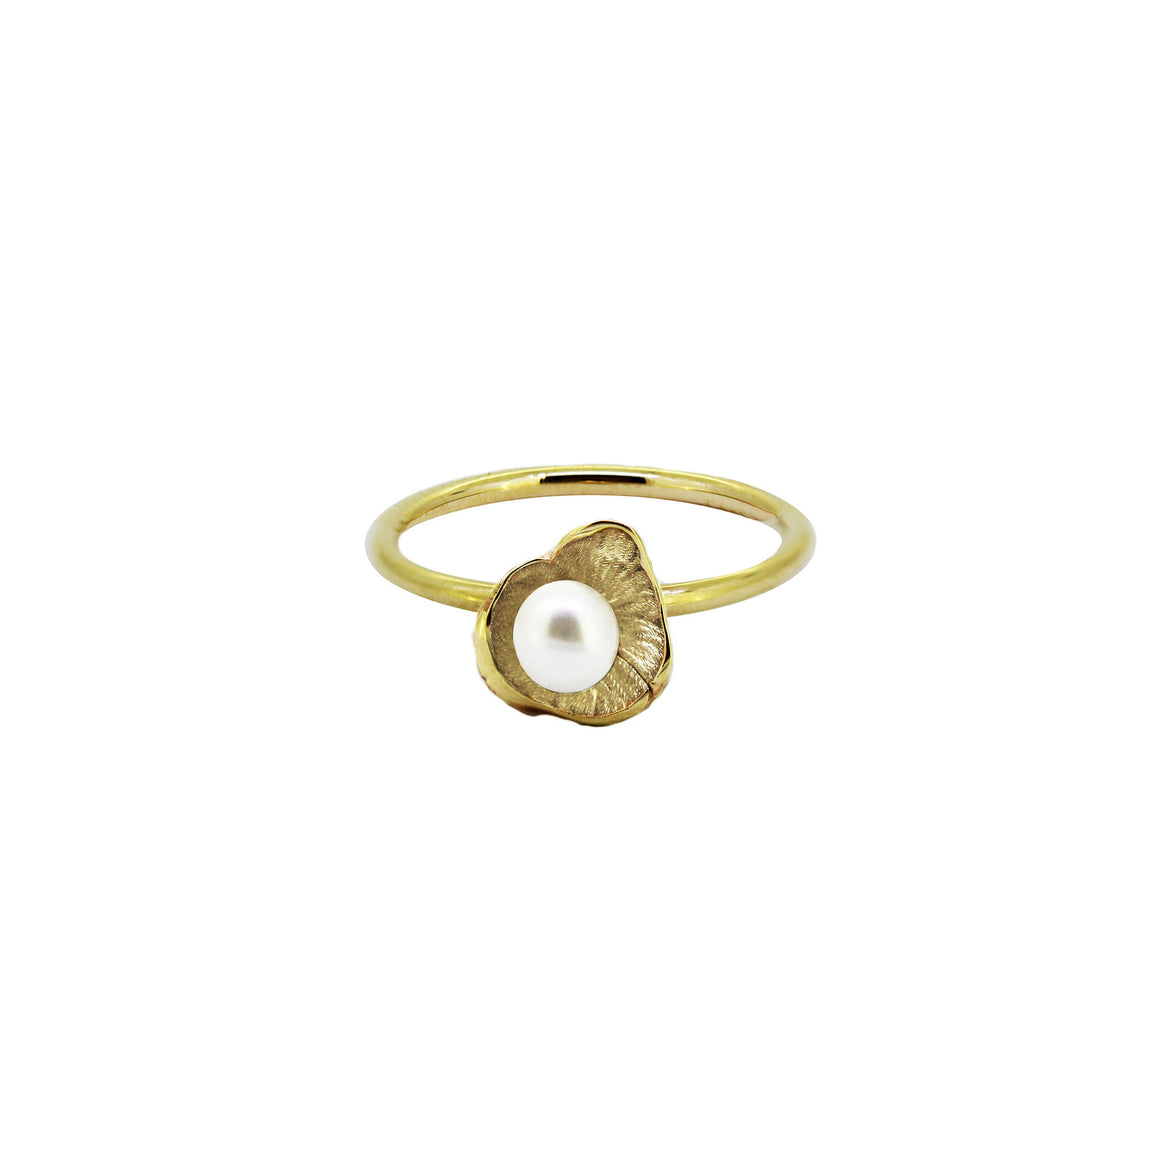 Small sunken treasure pearl ring in yellow gold